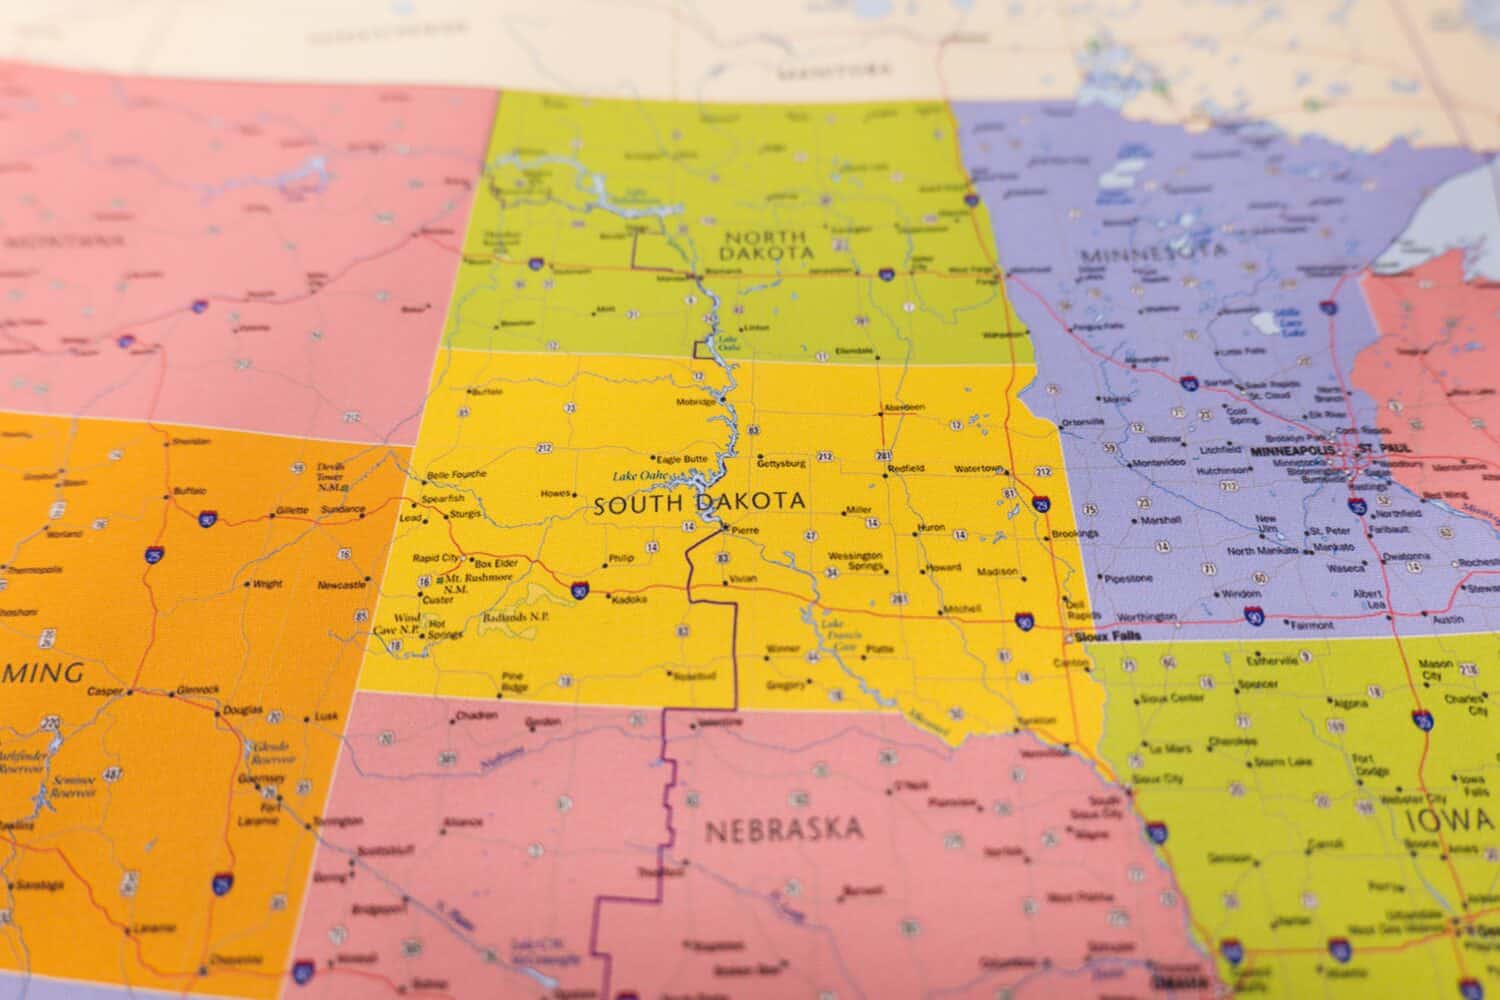 South Dakota state on the map. Discover the South Dakota state through this Map. Map of the South Dakota state with selective focus on state name by Artyom Lezhnyuk